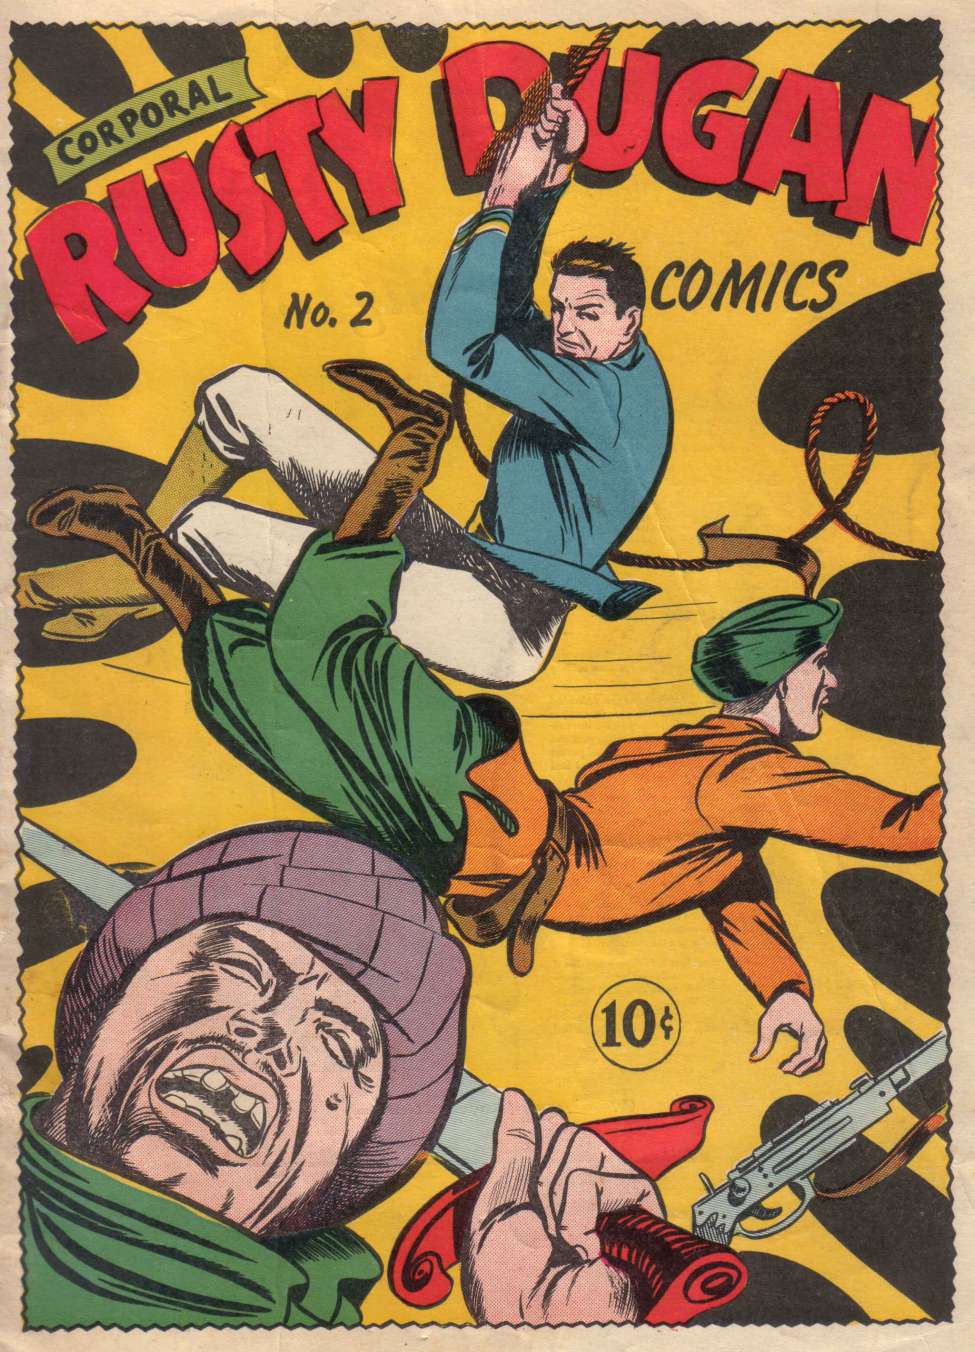 Comic Book Cover For Holyoke One-Shot 2 - Corporal Rusty Dugan Comics 2